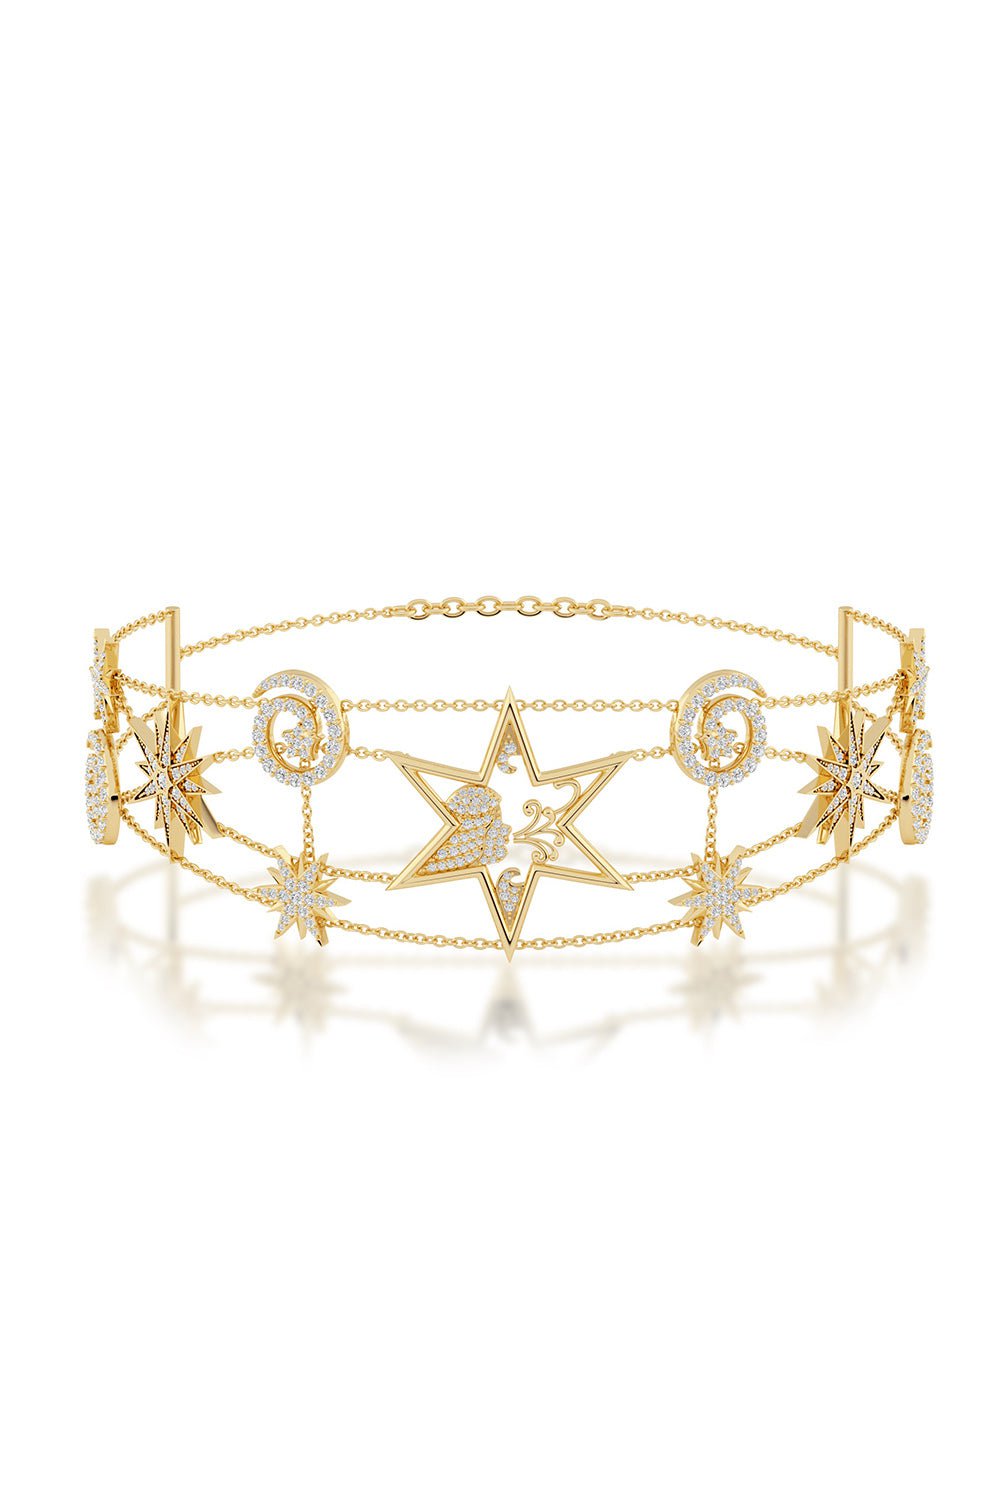 Amina Sorel Fine Jewelry-‘SWEET DREAMS’ MESH CHAIN & DIAMOND CHOKER NECKLACE-YELLOW GOLD